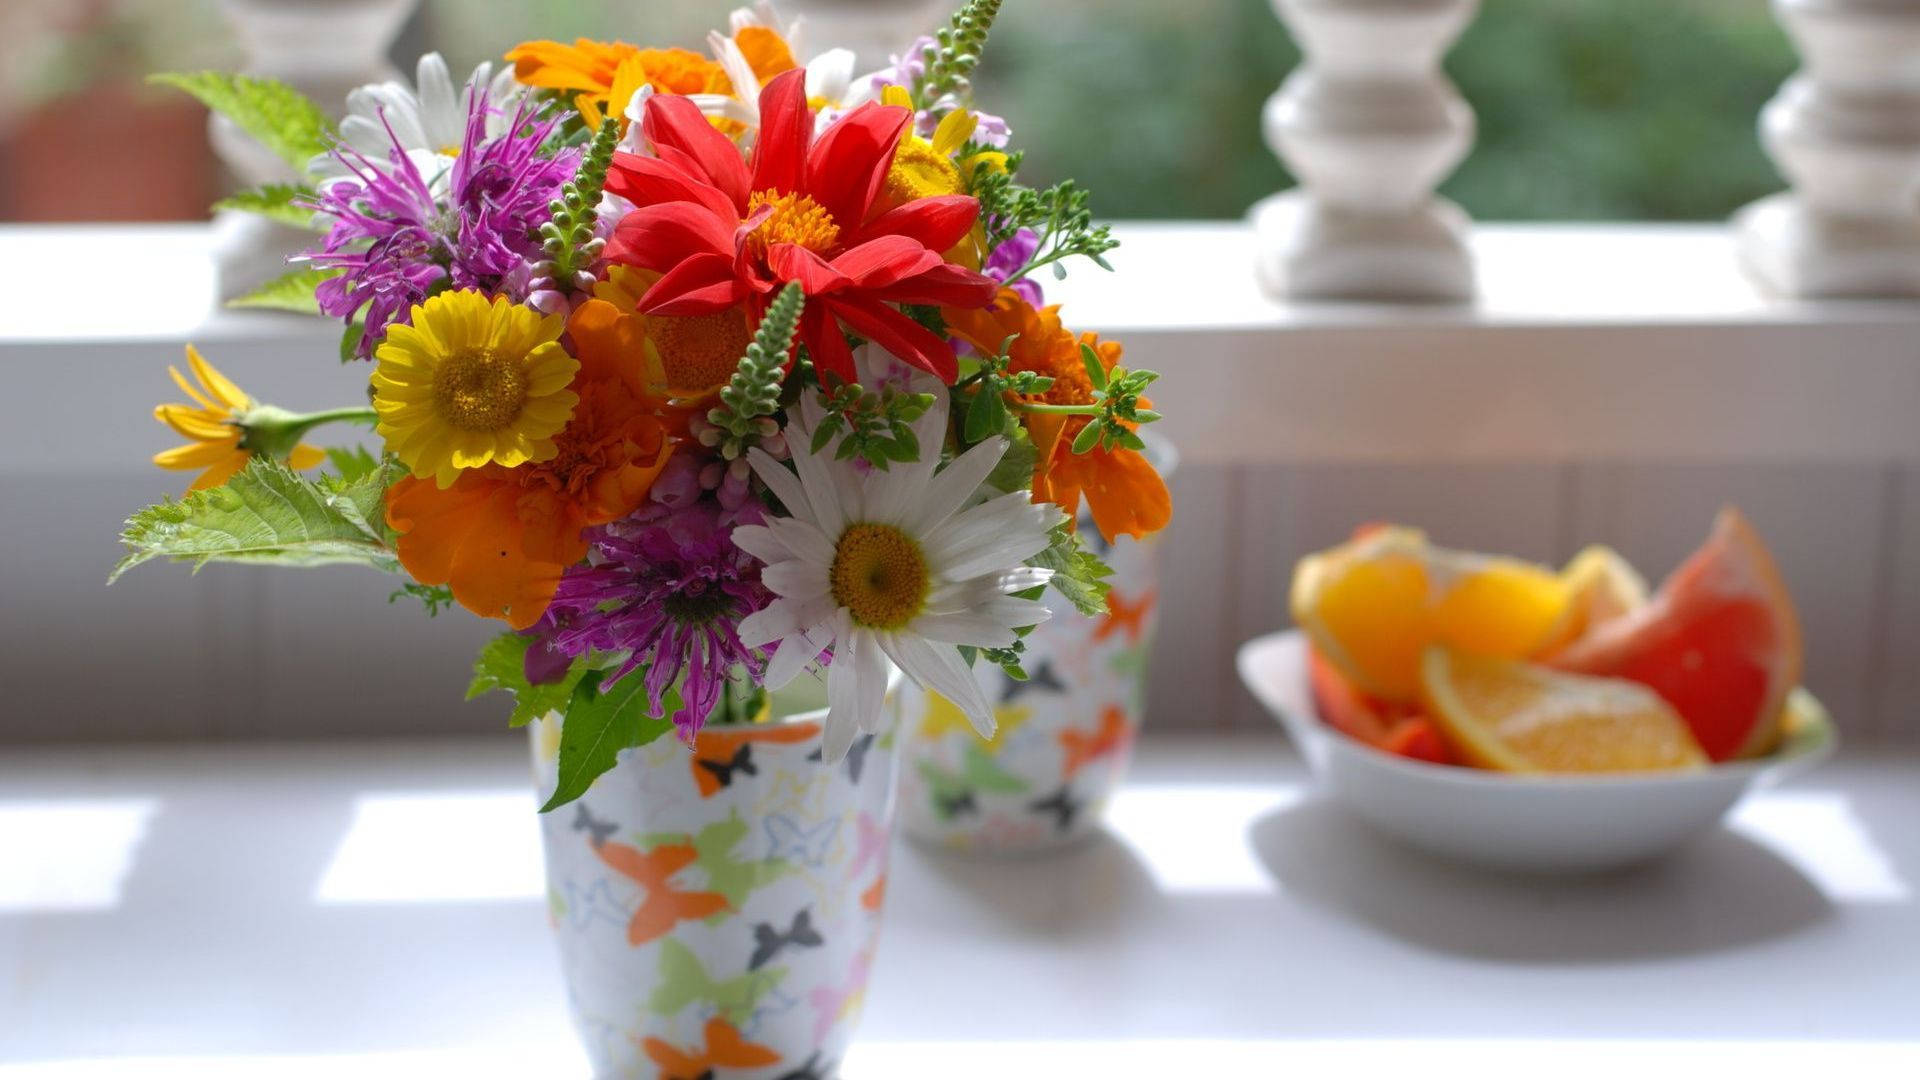 Free Flower Vase Wallpaper Downloads, [100+] Flower Vase Wallpapers for  FREE 